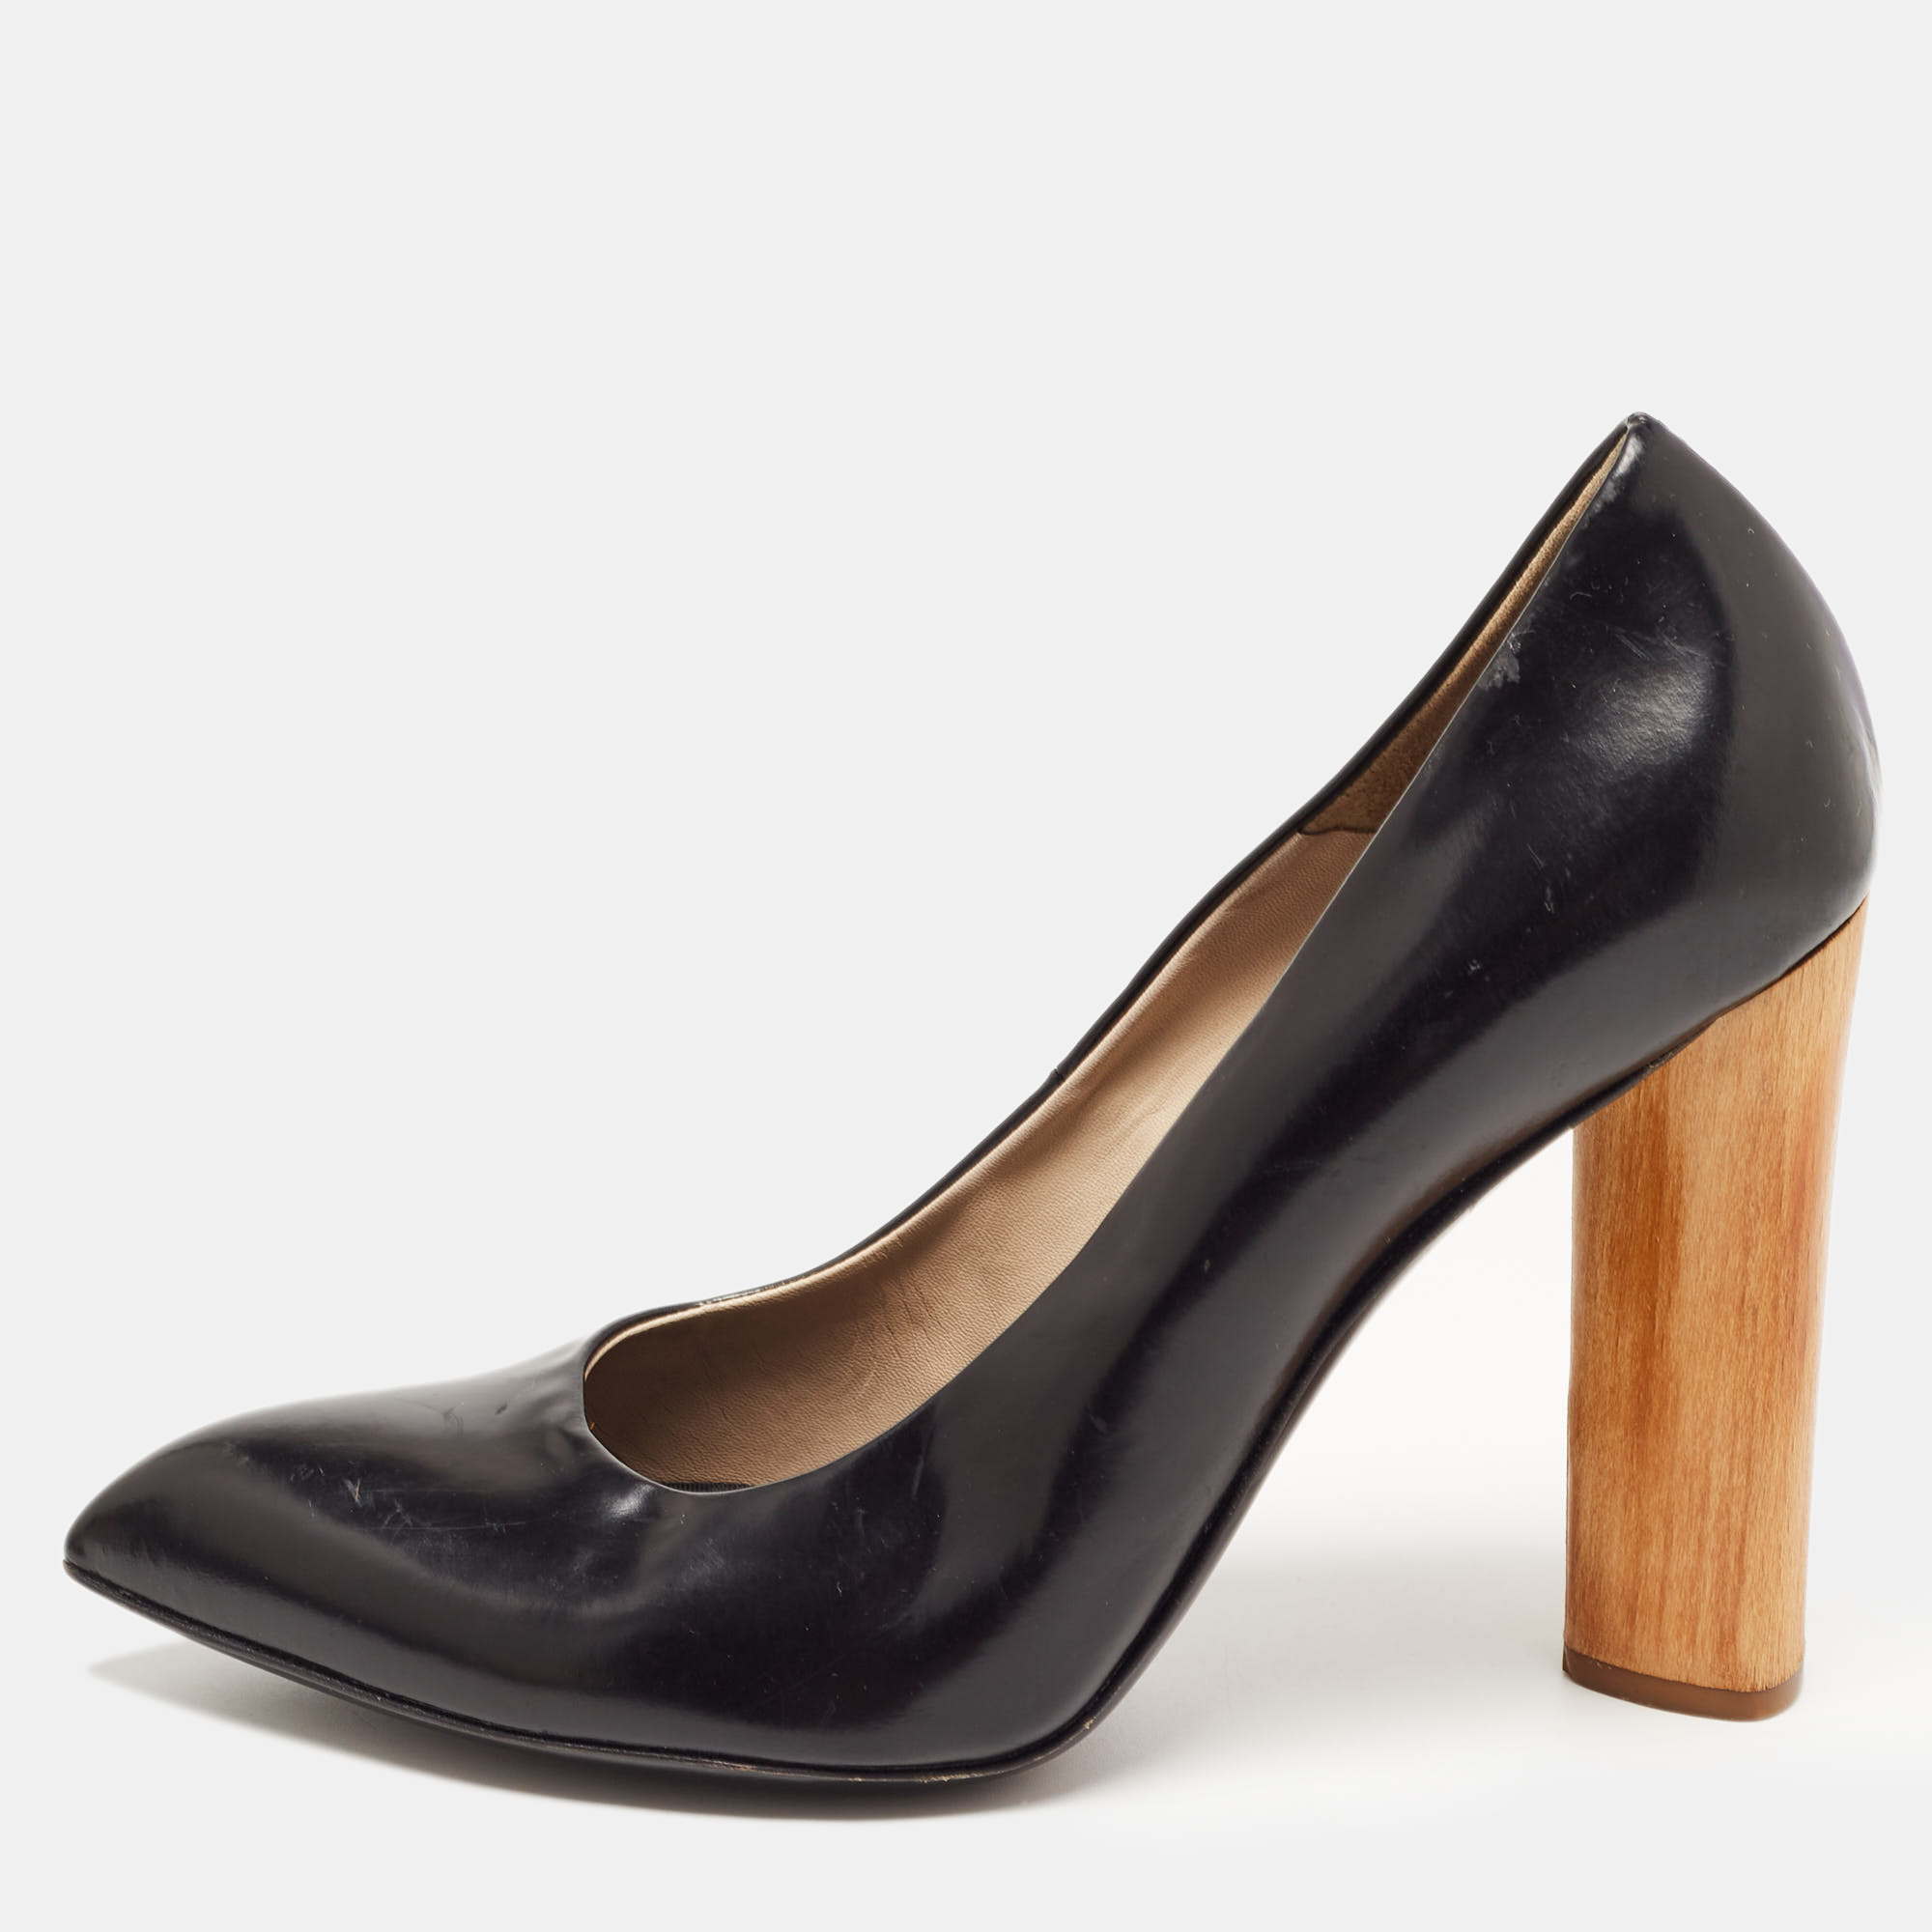 Yves saint laurent black leather pointed toe wood heel pumps size 41